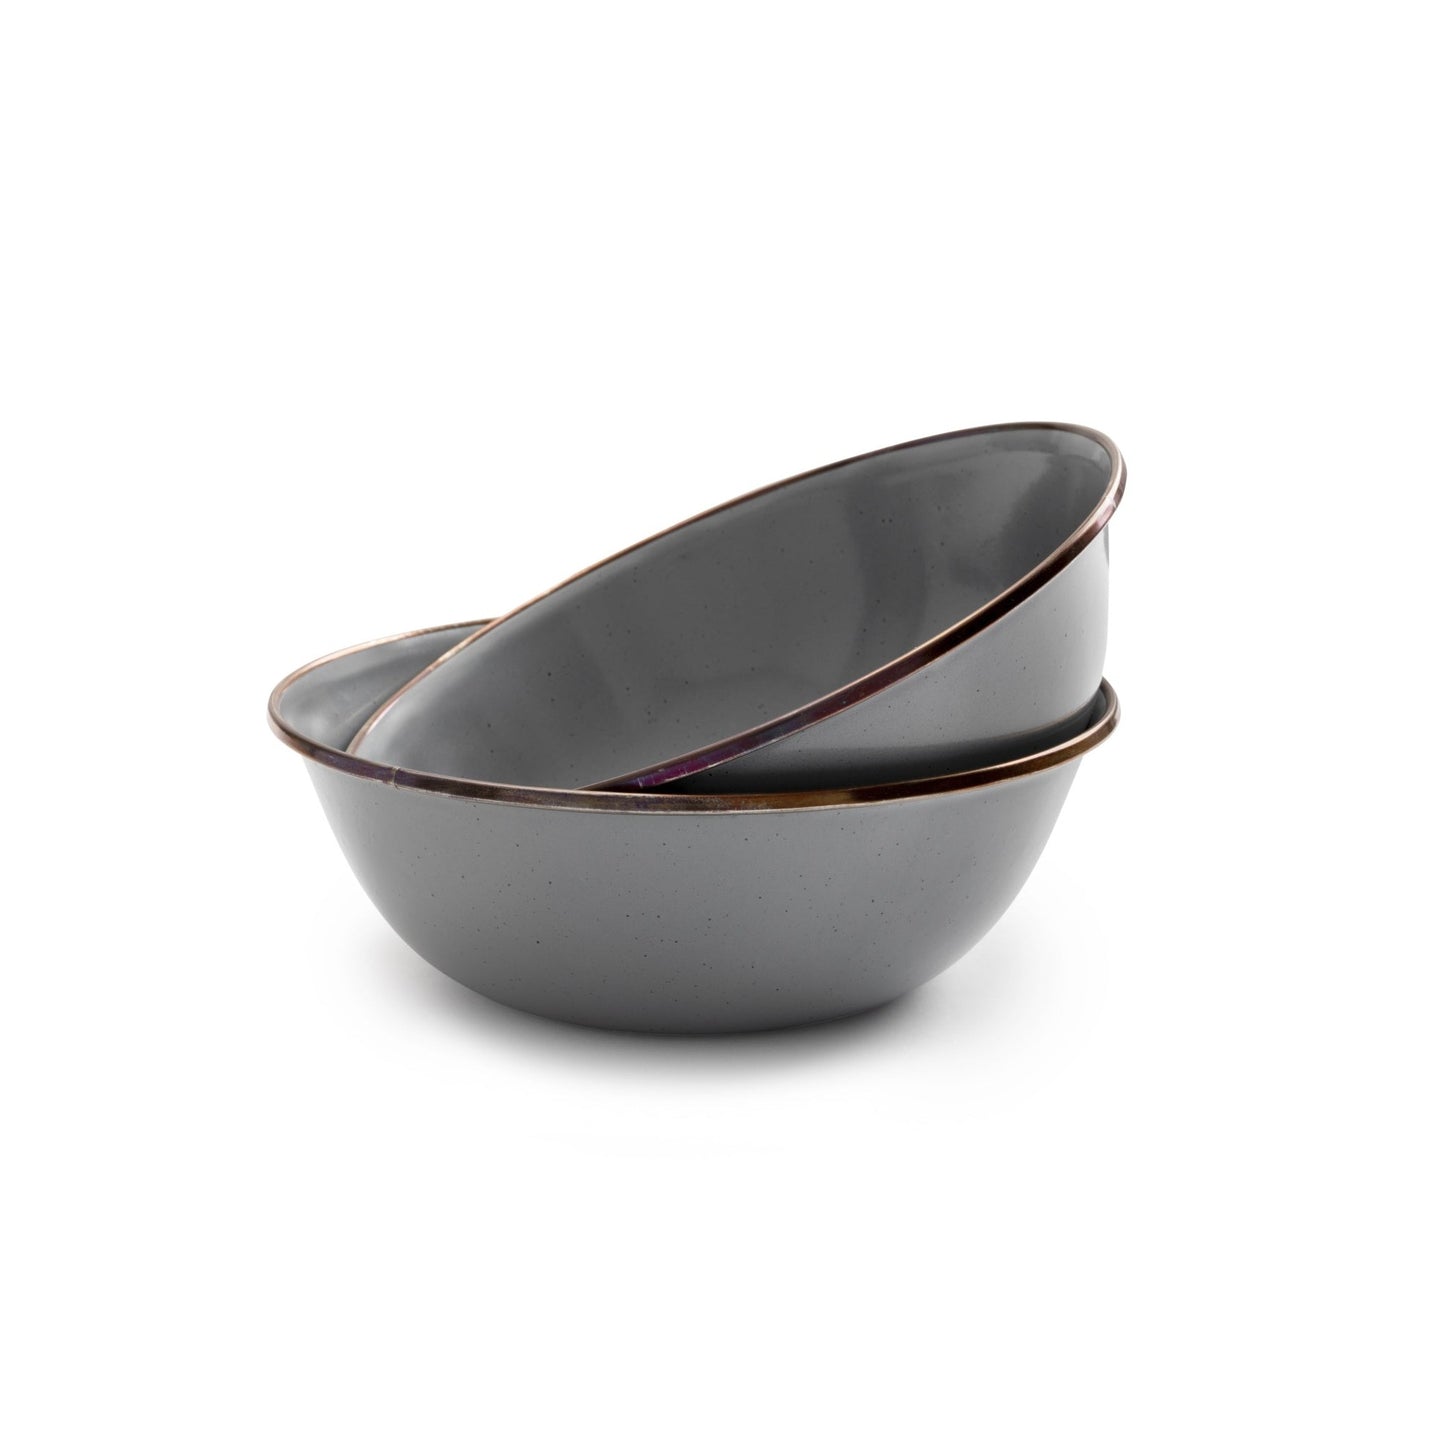 Barebones Living Enamel Bowl set of 2 - Slate Gray